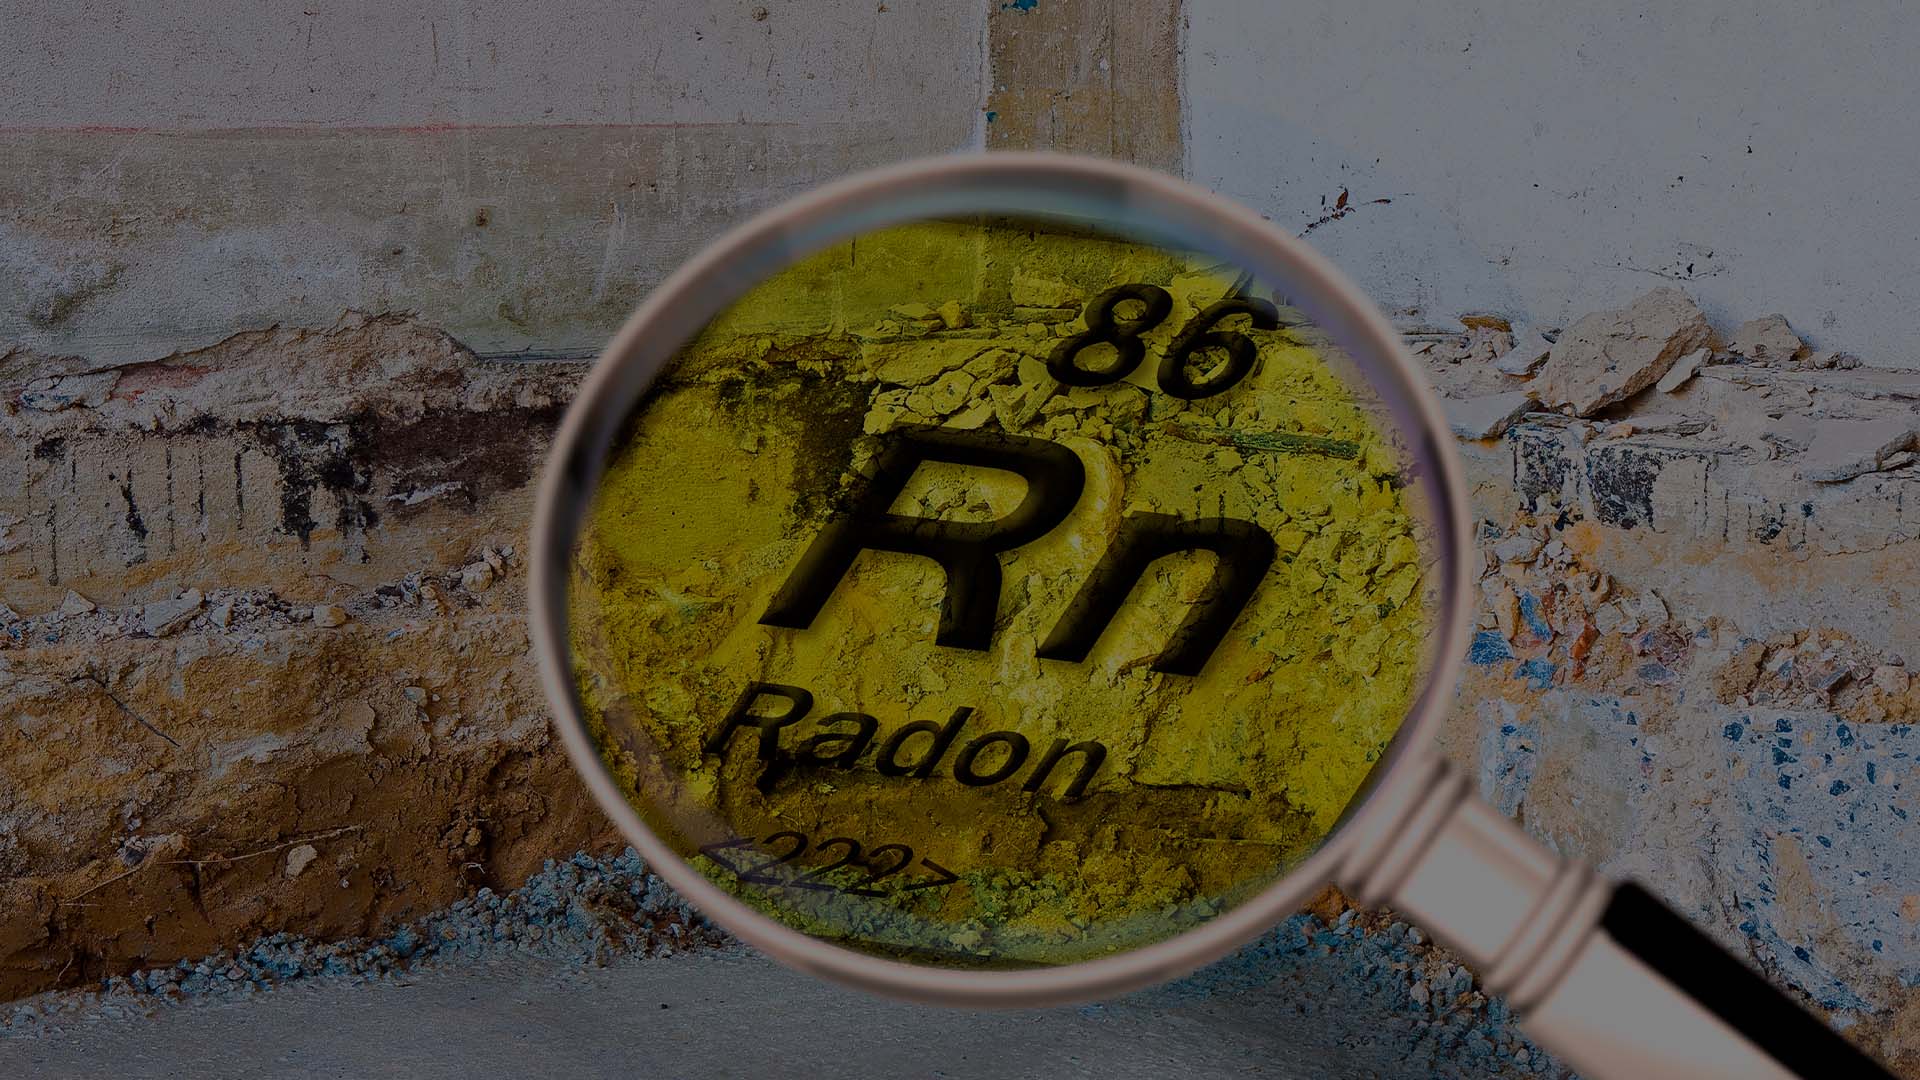 radon-testing-service-high-quality-columbus-oh.jpg